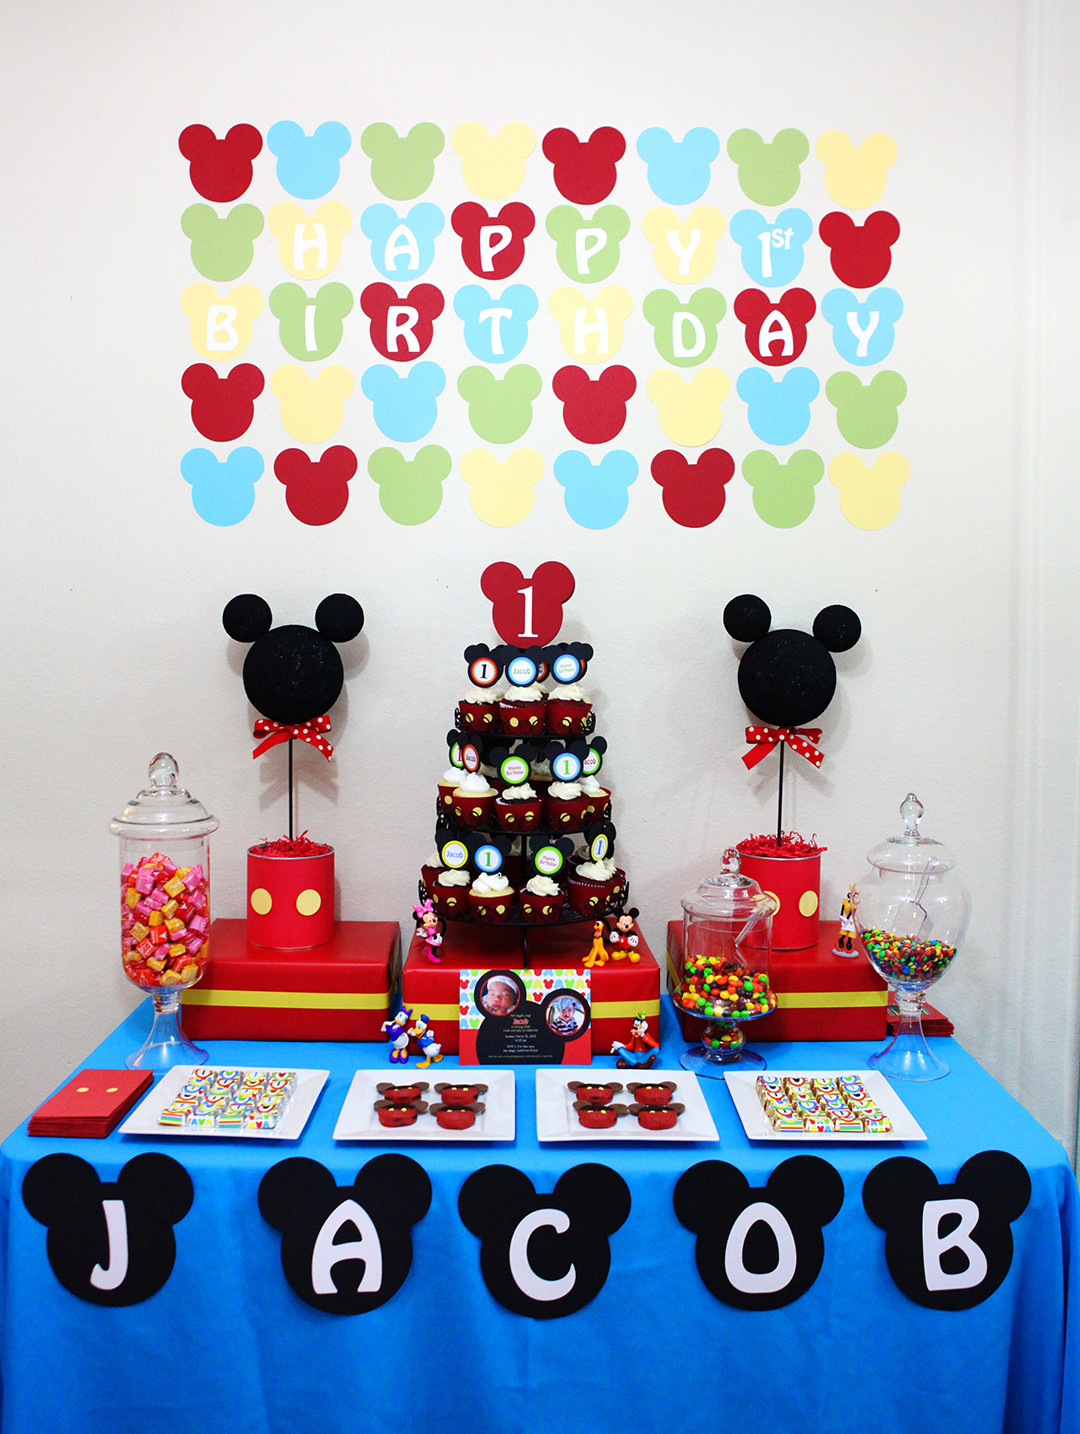 Mickey Mouse Birthday Decoration Ideas
 Invitation Parlour Mickey Mouse Birthday Party